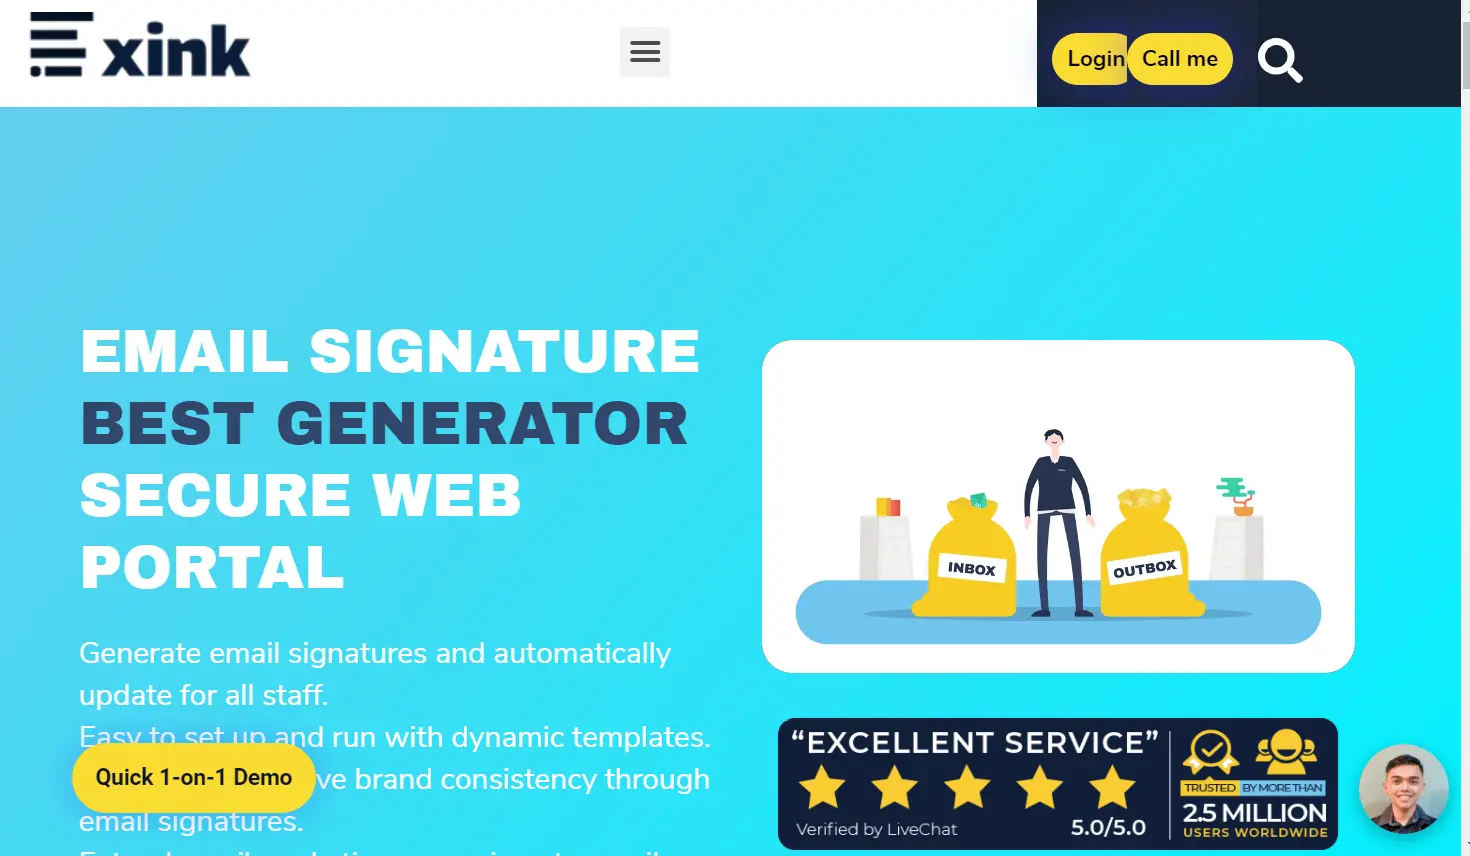 Xink email signature generator